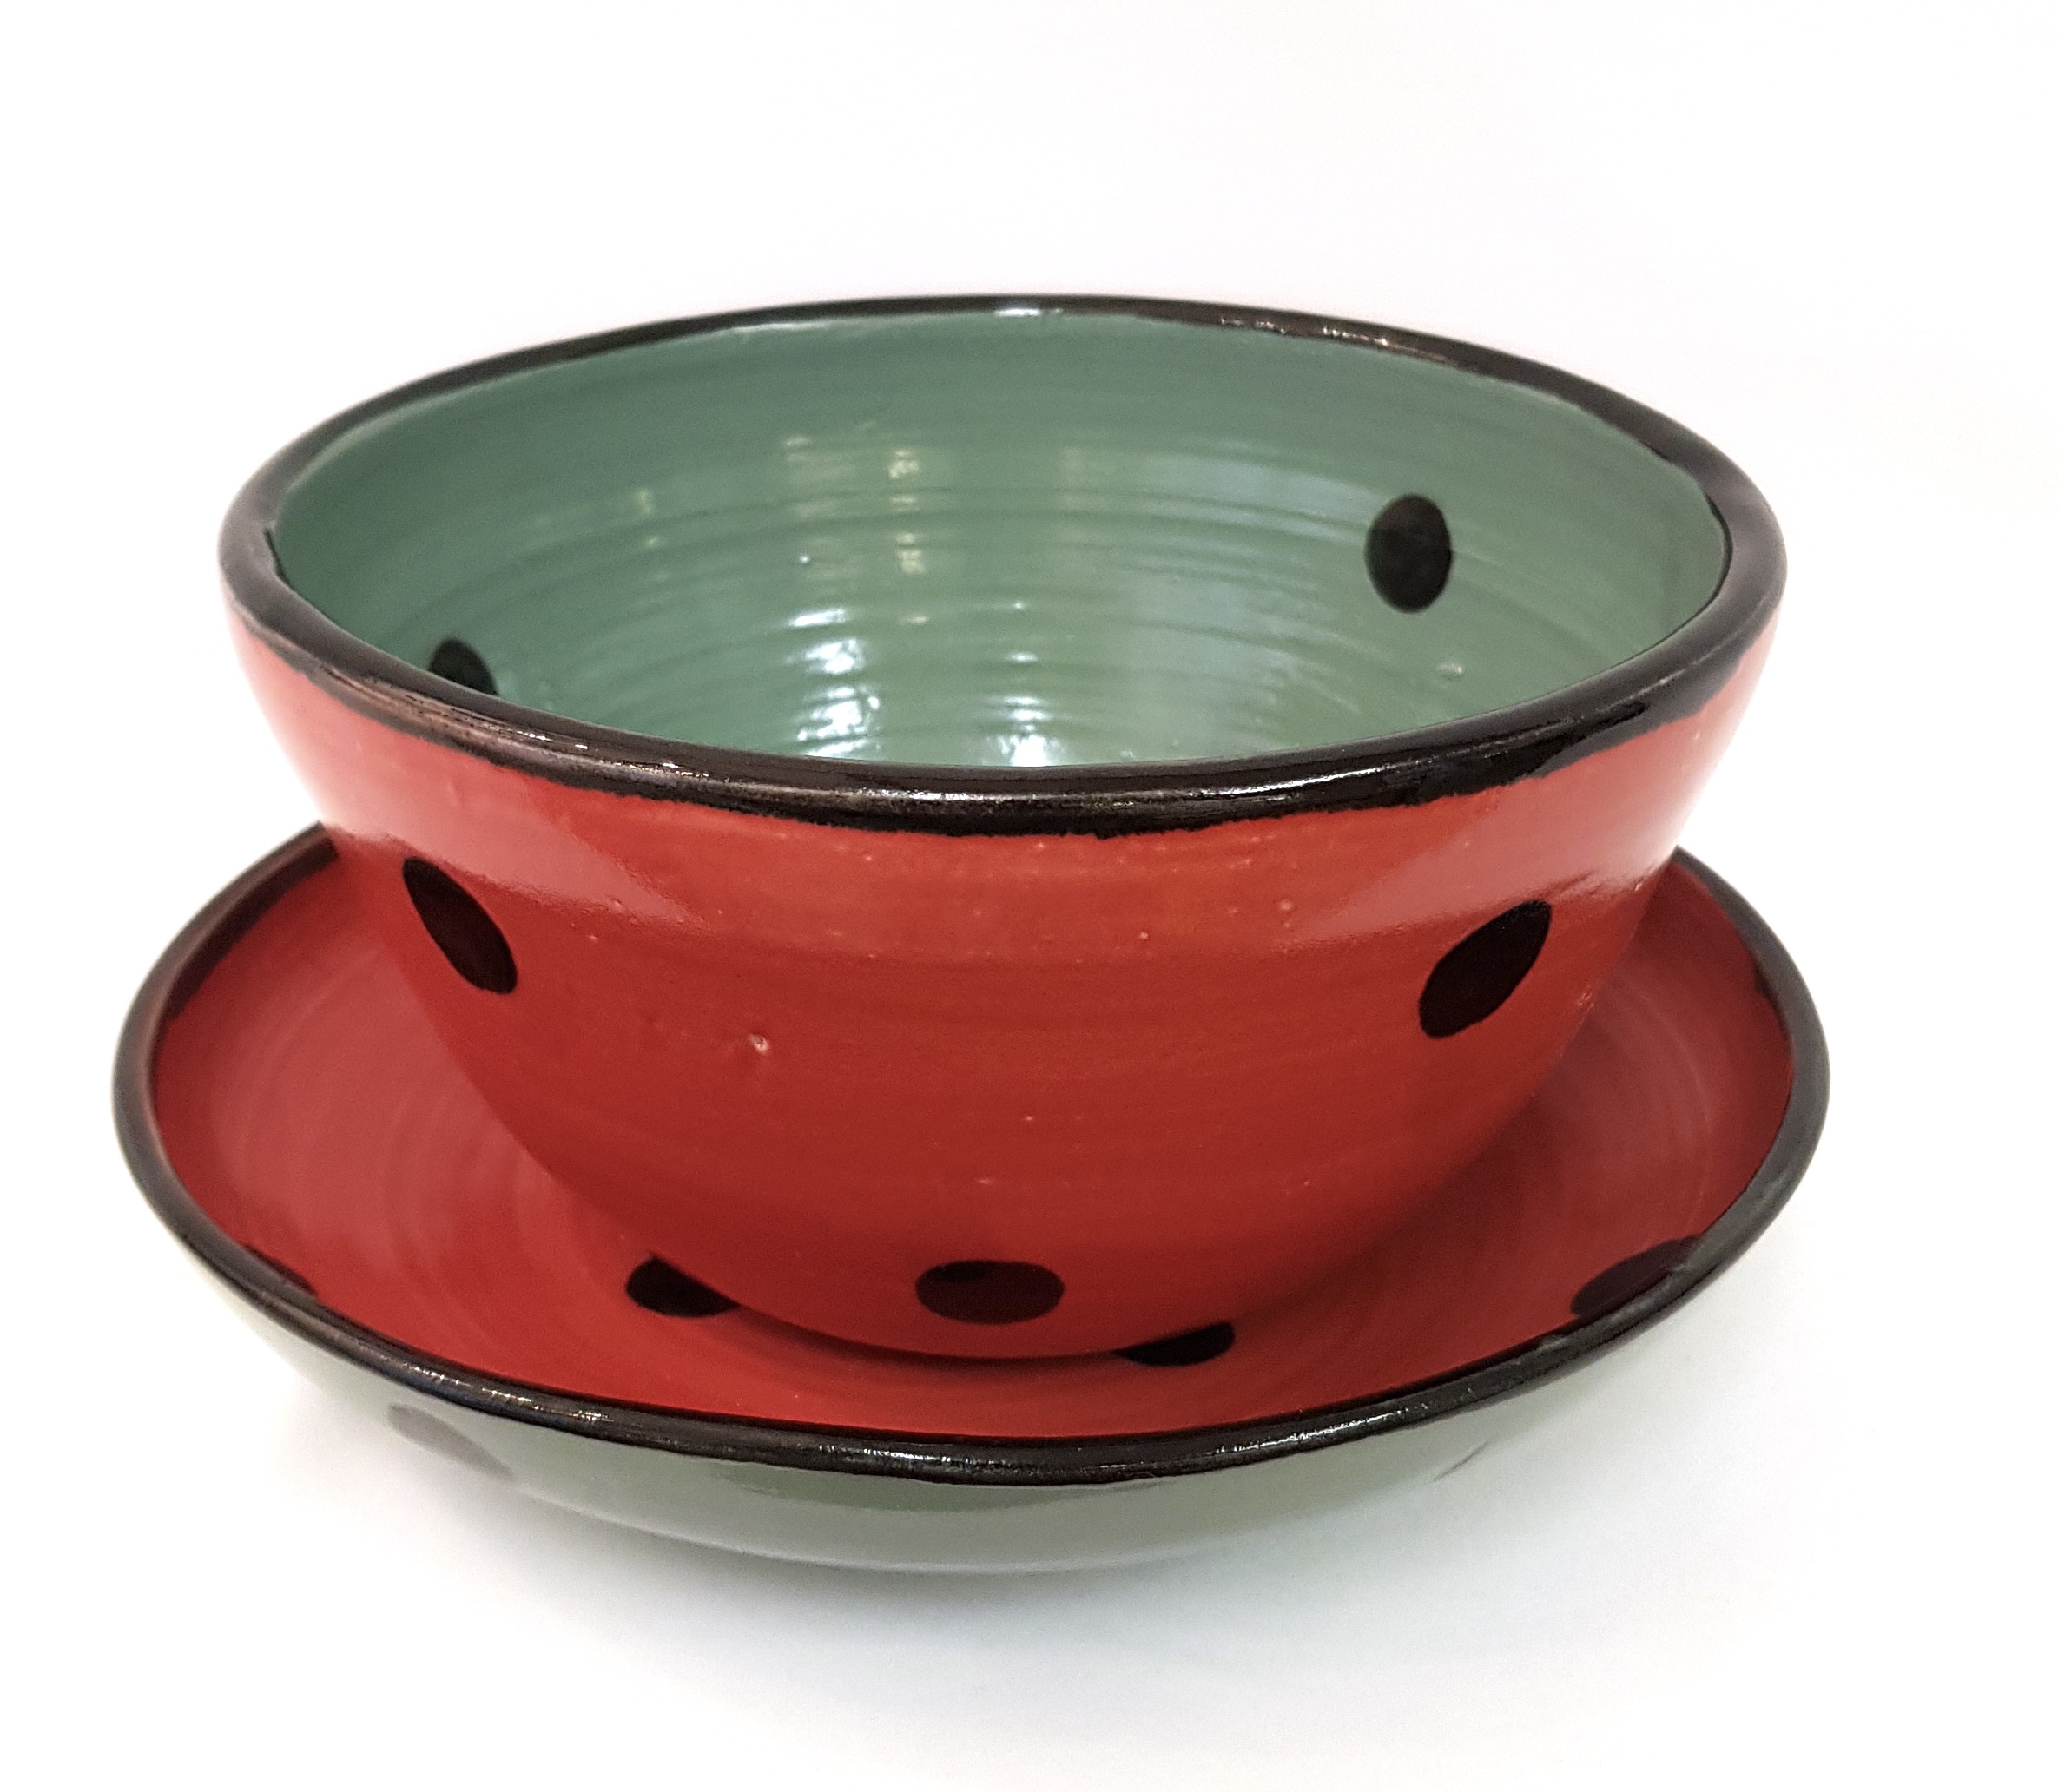 Keramik-Bowl mit Teller, Unikat, Töpferei la ceramica Basel, Töpferkurse, Shop, Keramik, Teamevents